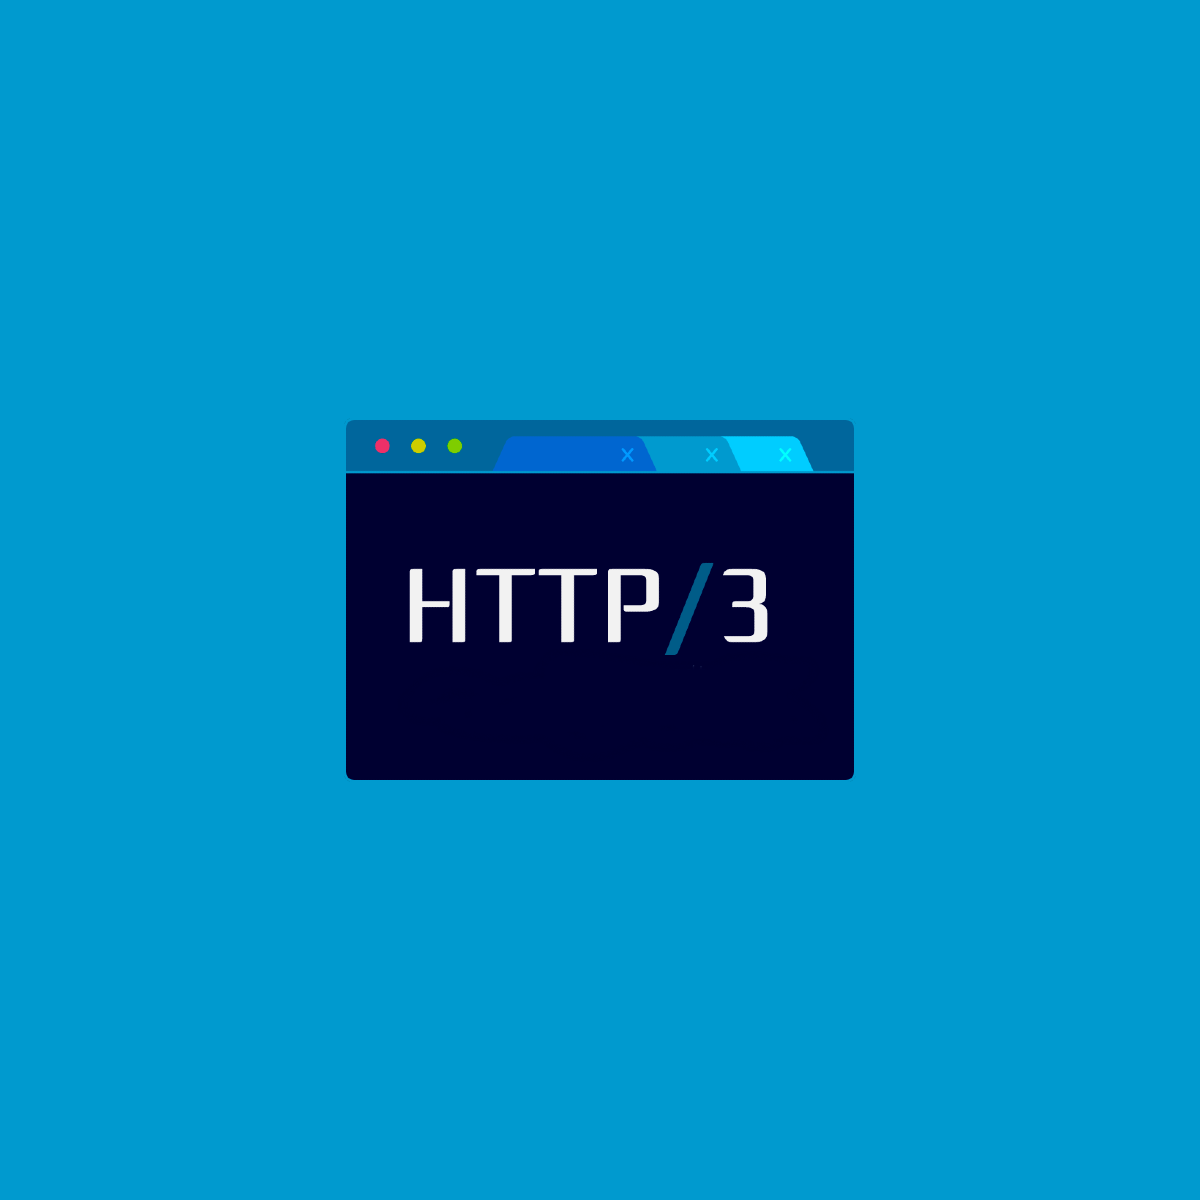 HTTP/3 protocol